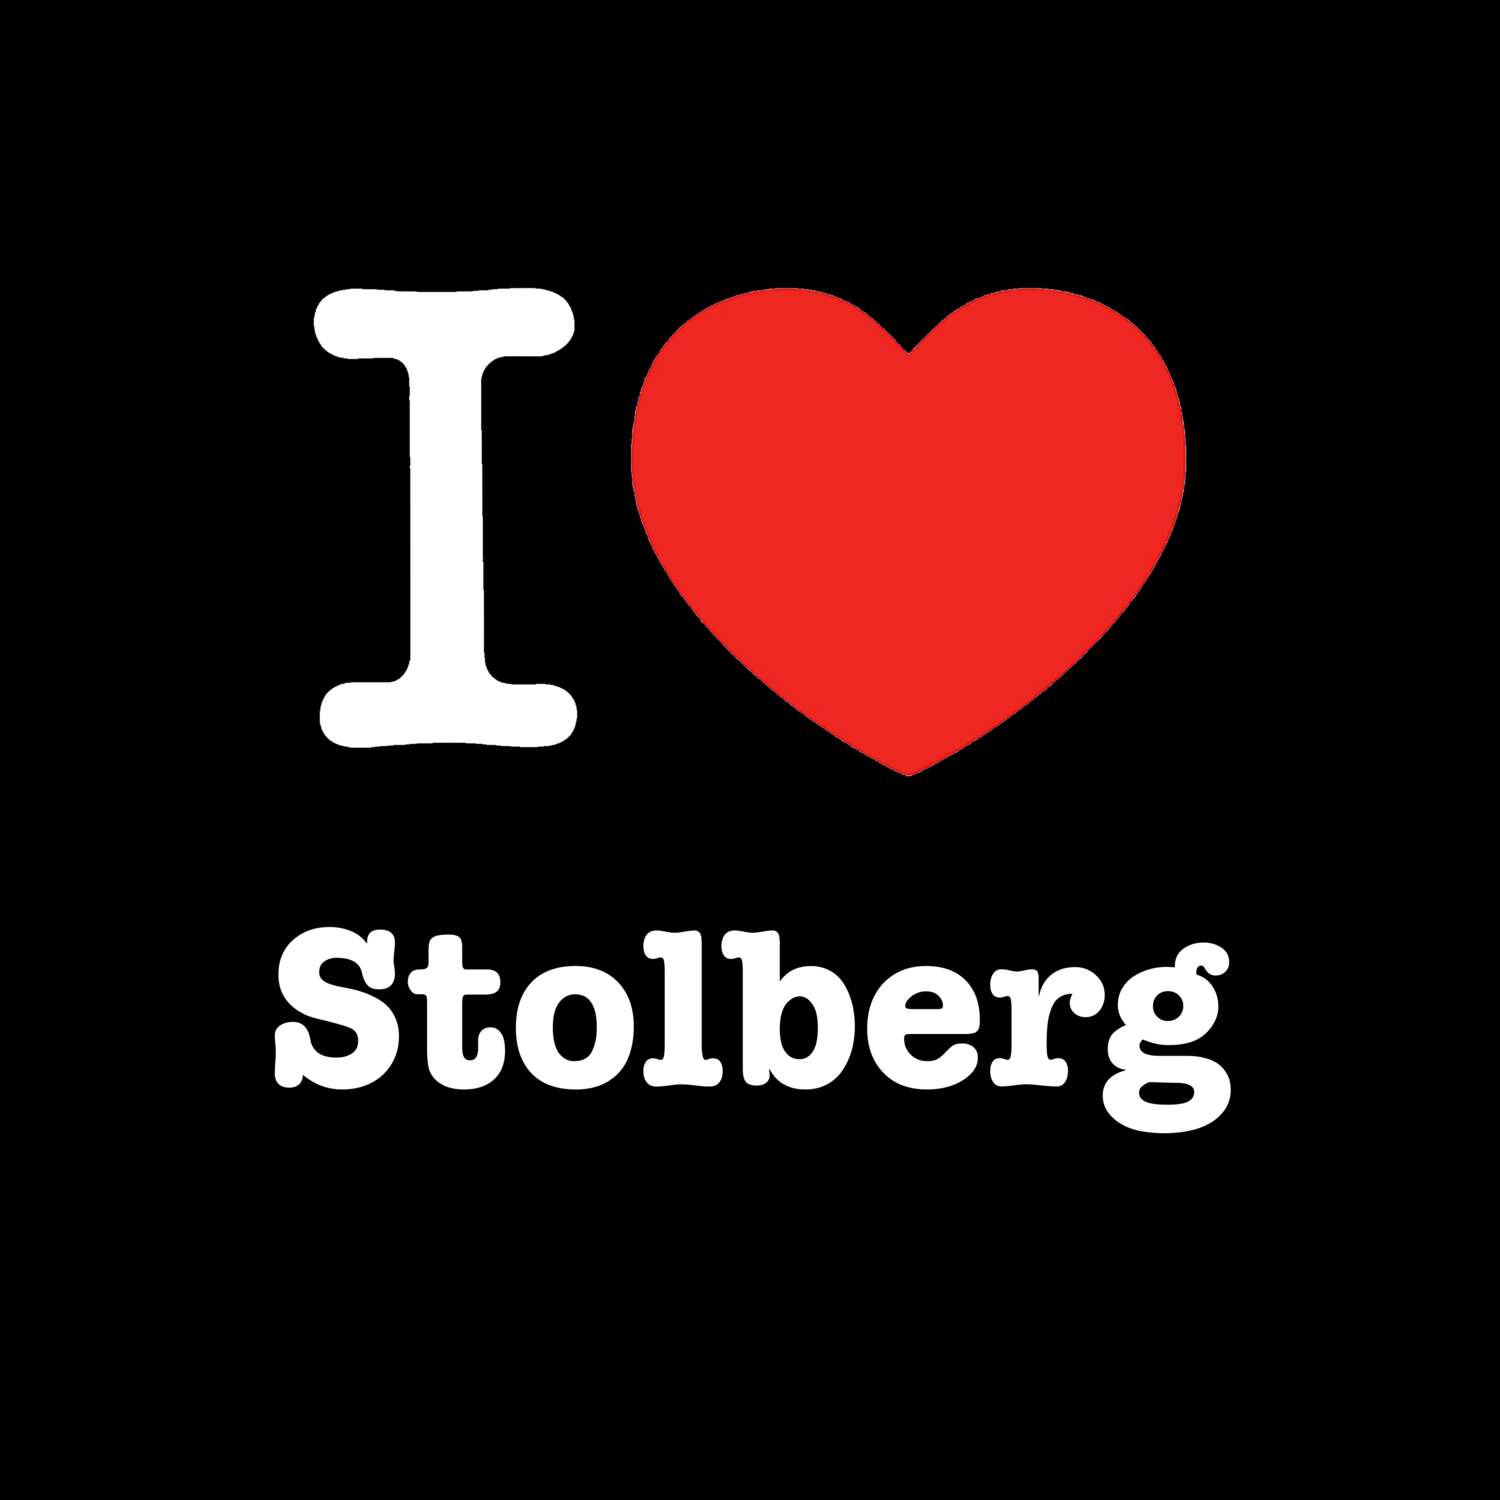 Stolberg T-Shirt »I love«